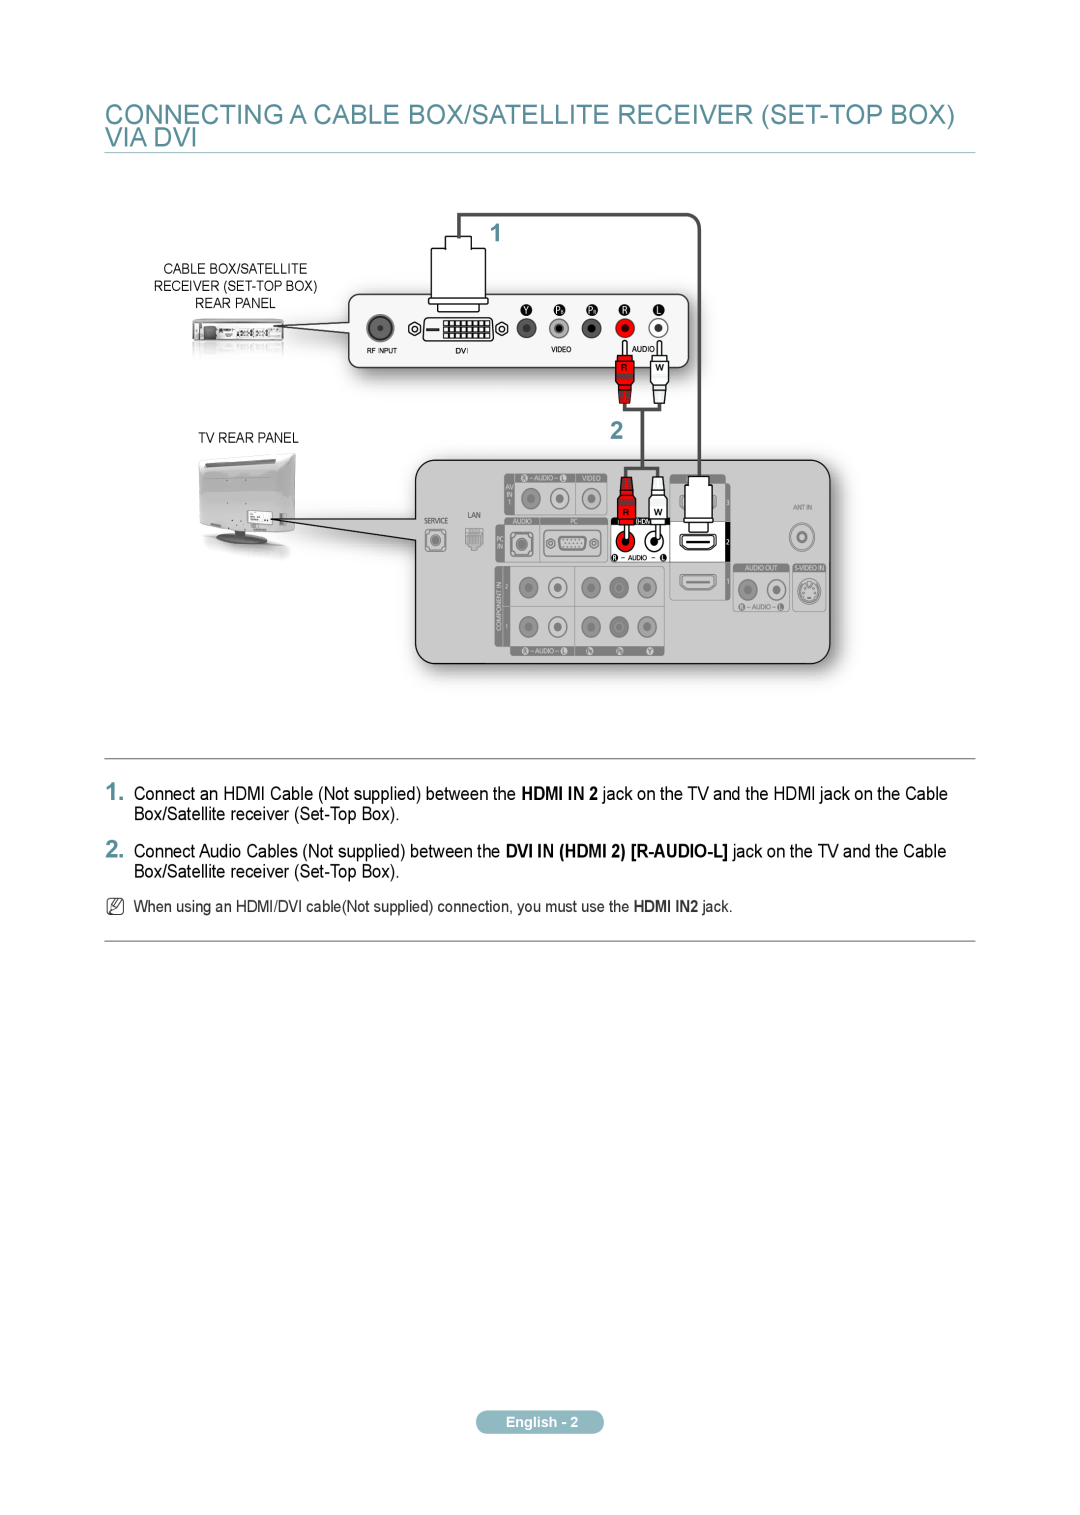 Samsung LA46A850S1R quick start Connecting a Cable Box/Satellite receiver Set-Top Box via DVI, English 